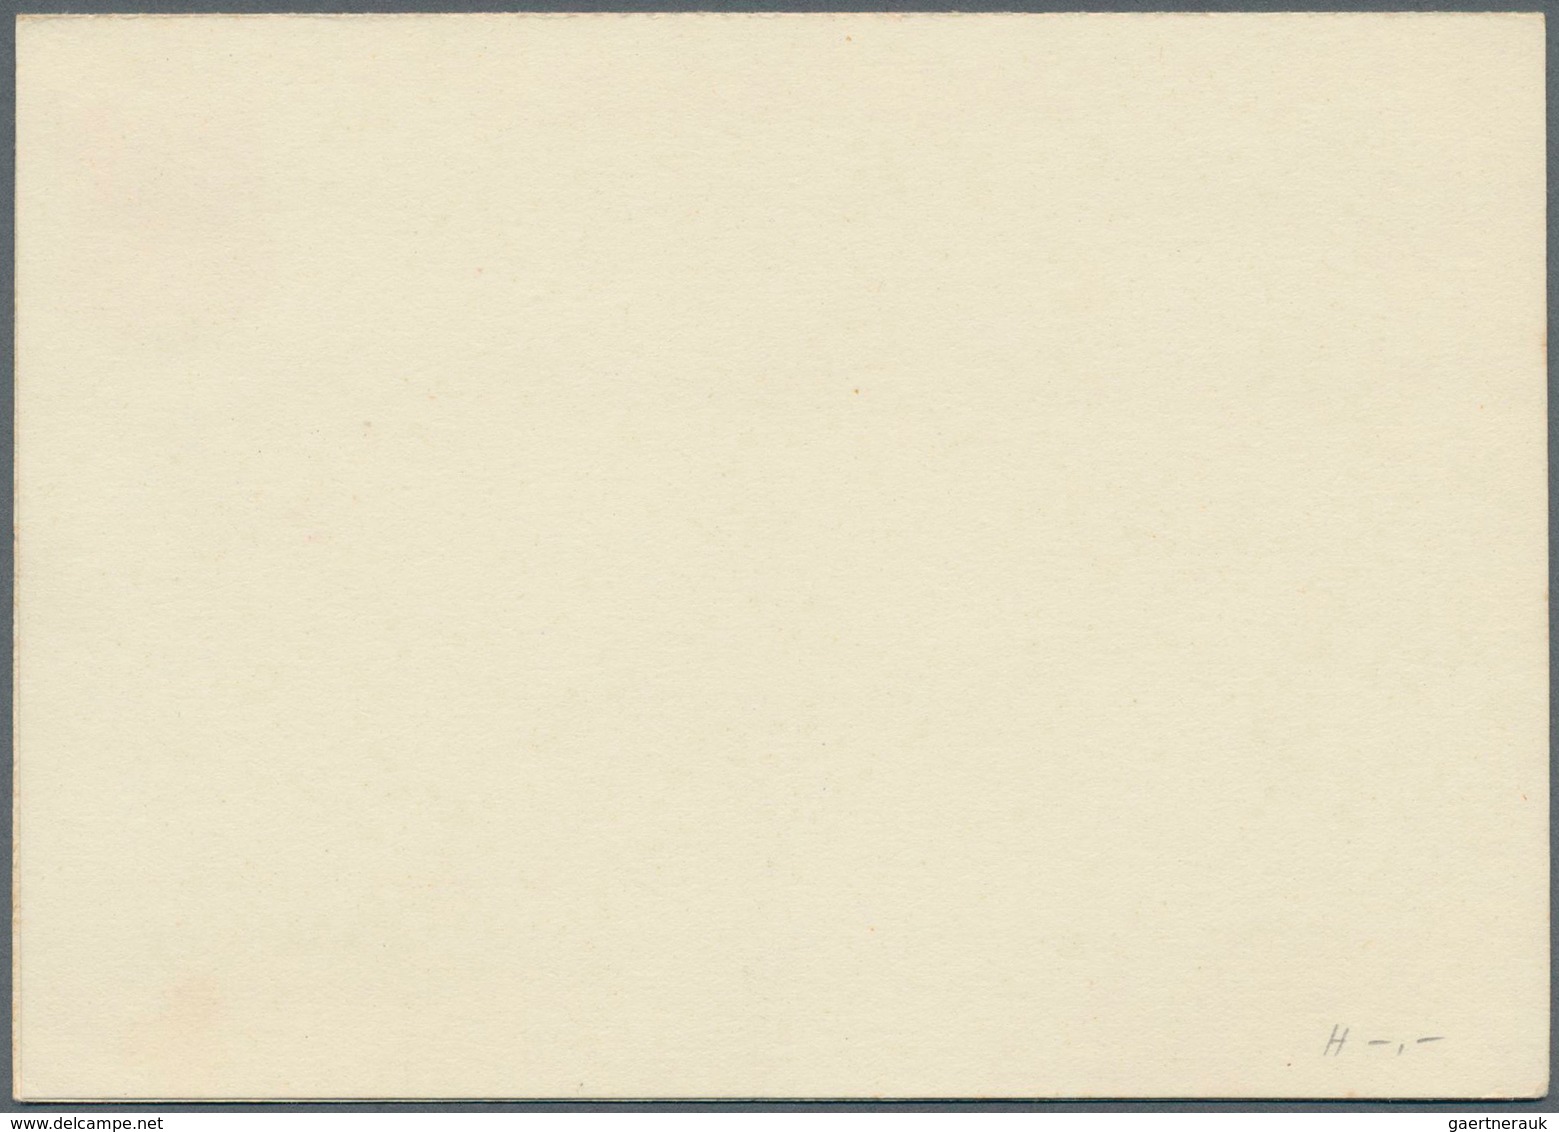 Italien - Ganzsachen: 1956: 35 L + 35 L Bilingual Replay Postal Stationery Card, Unused, Rare. (Mi. - Stamped Stationery